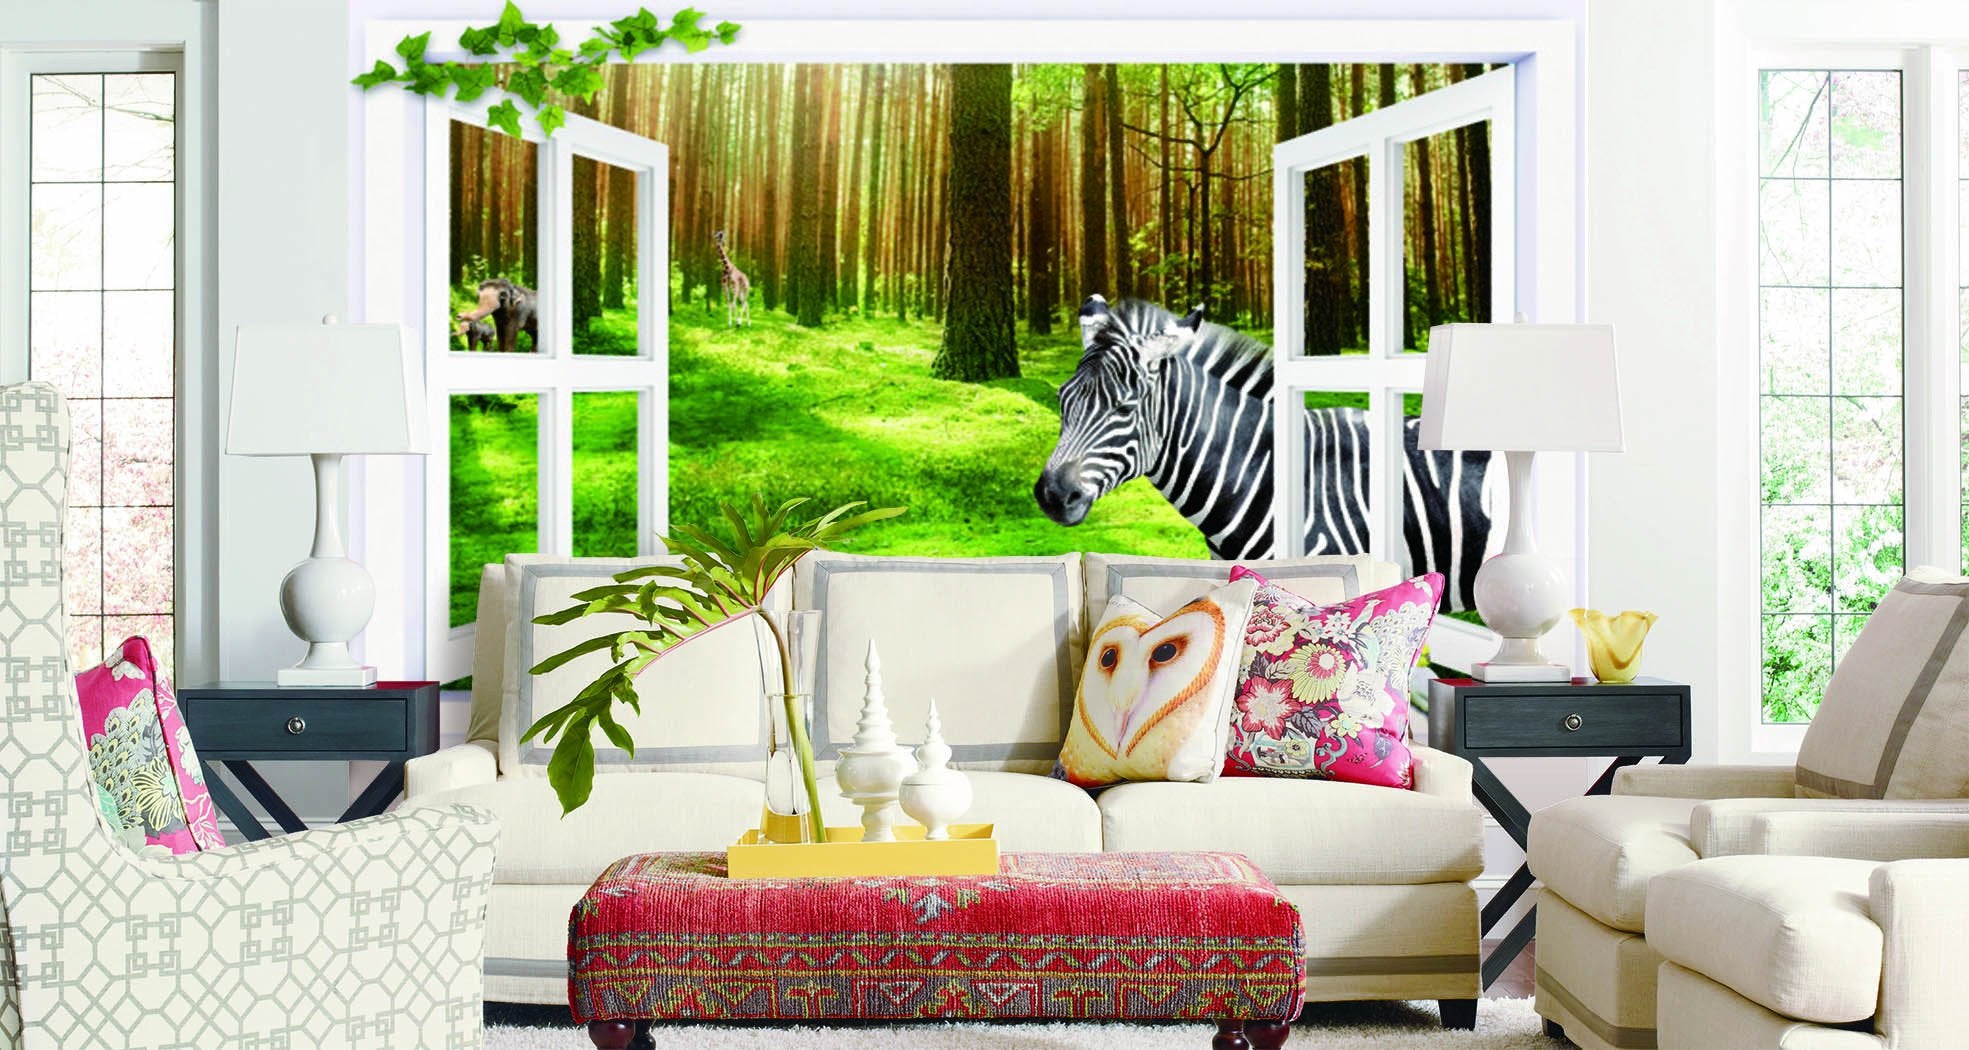 3D Zebra Shrub Forest 056 Wallpaper AJ Wallpaper 